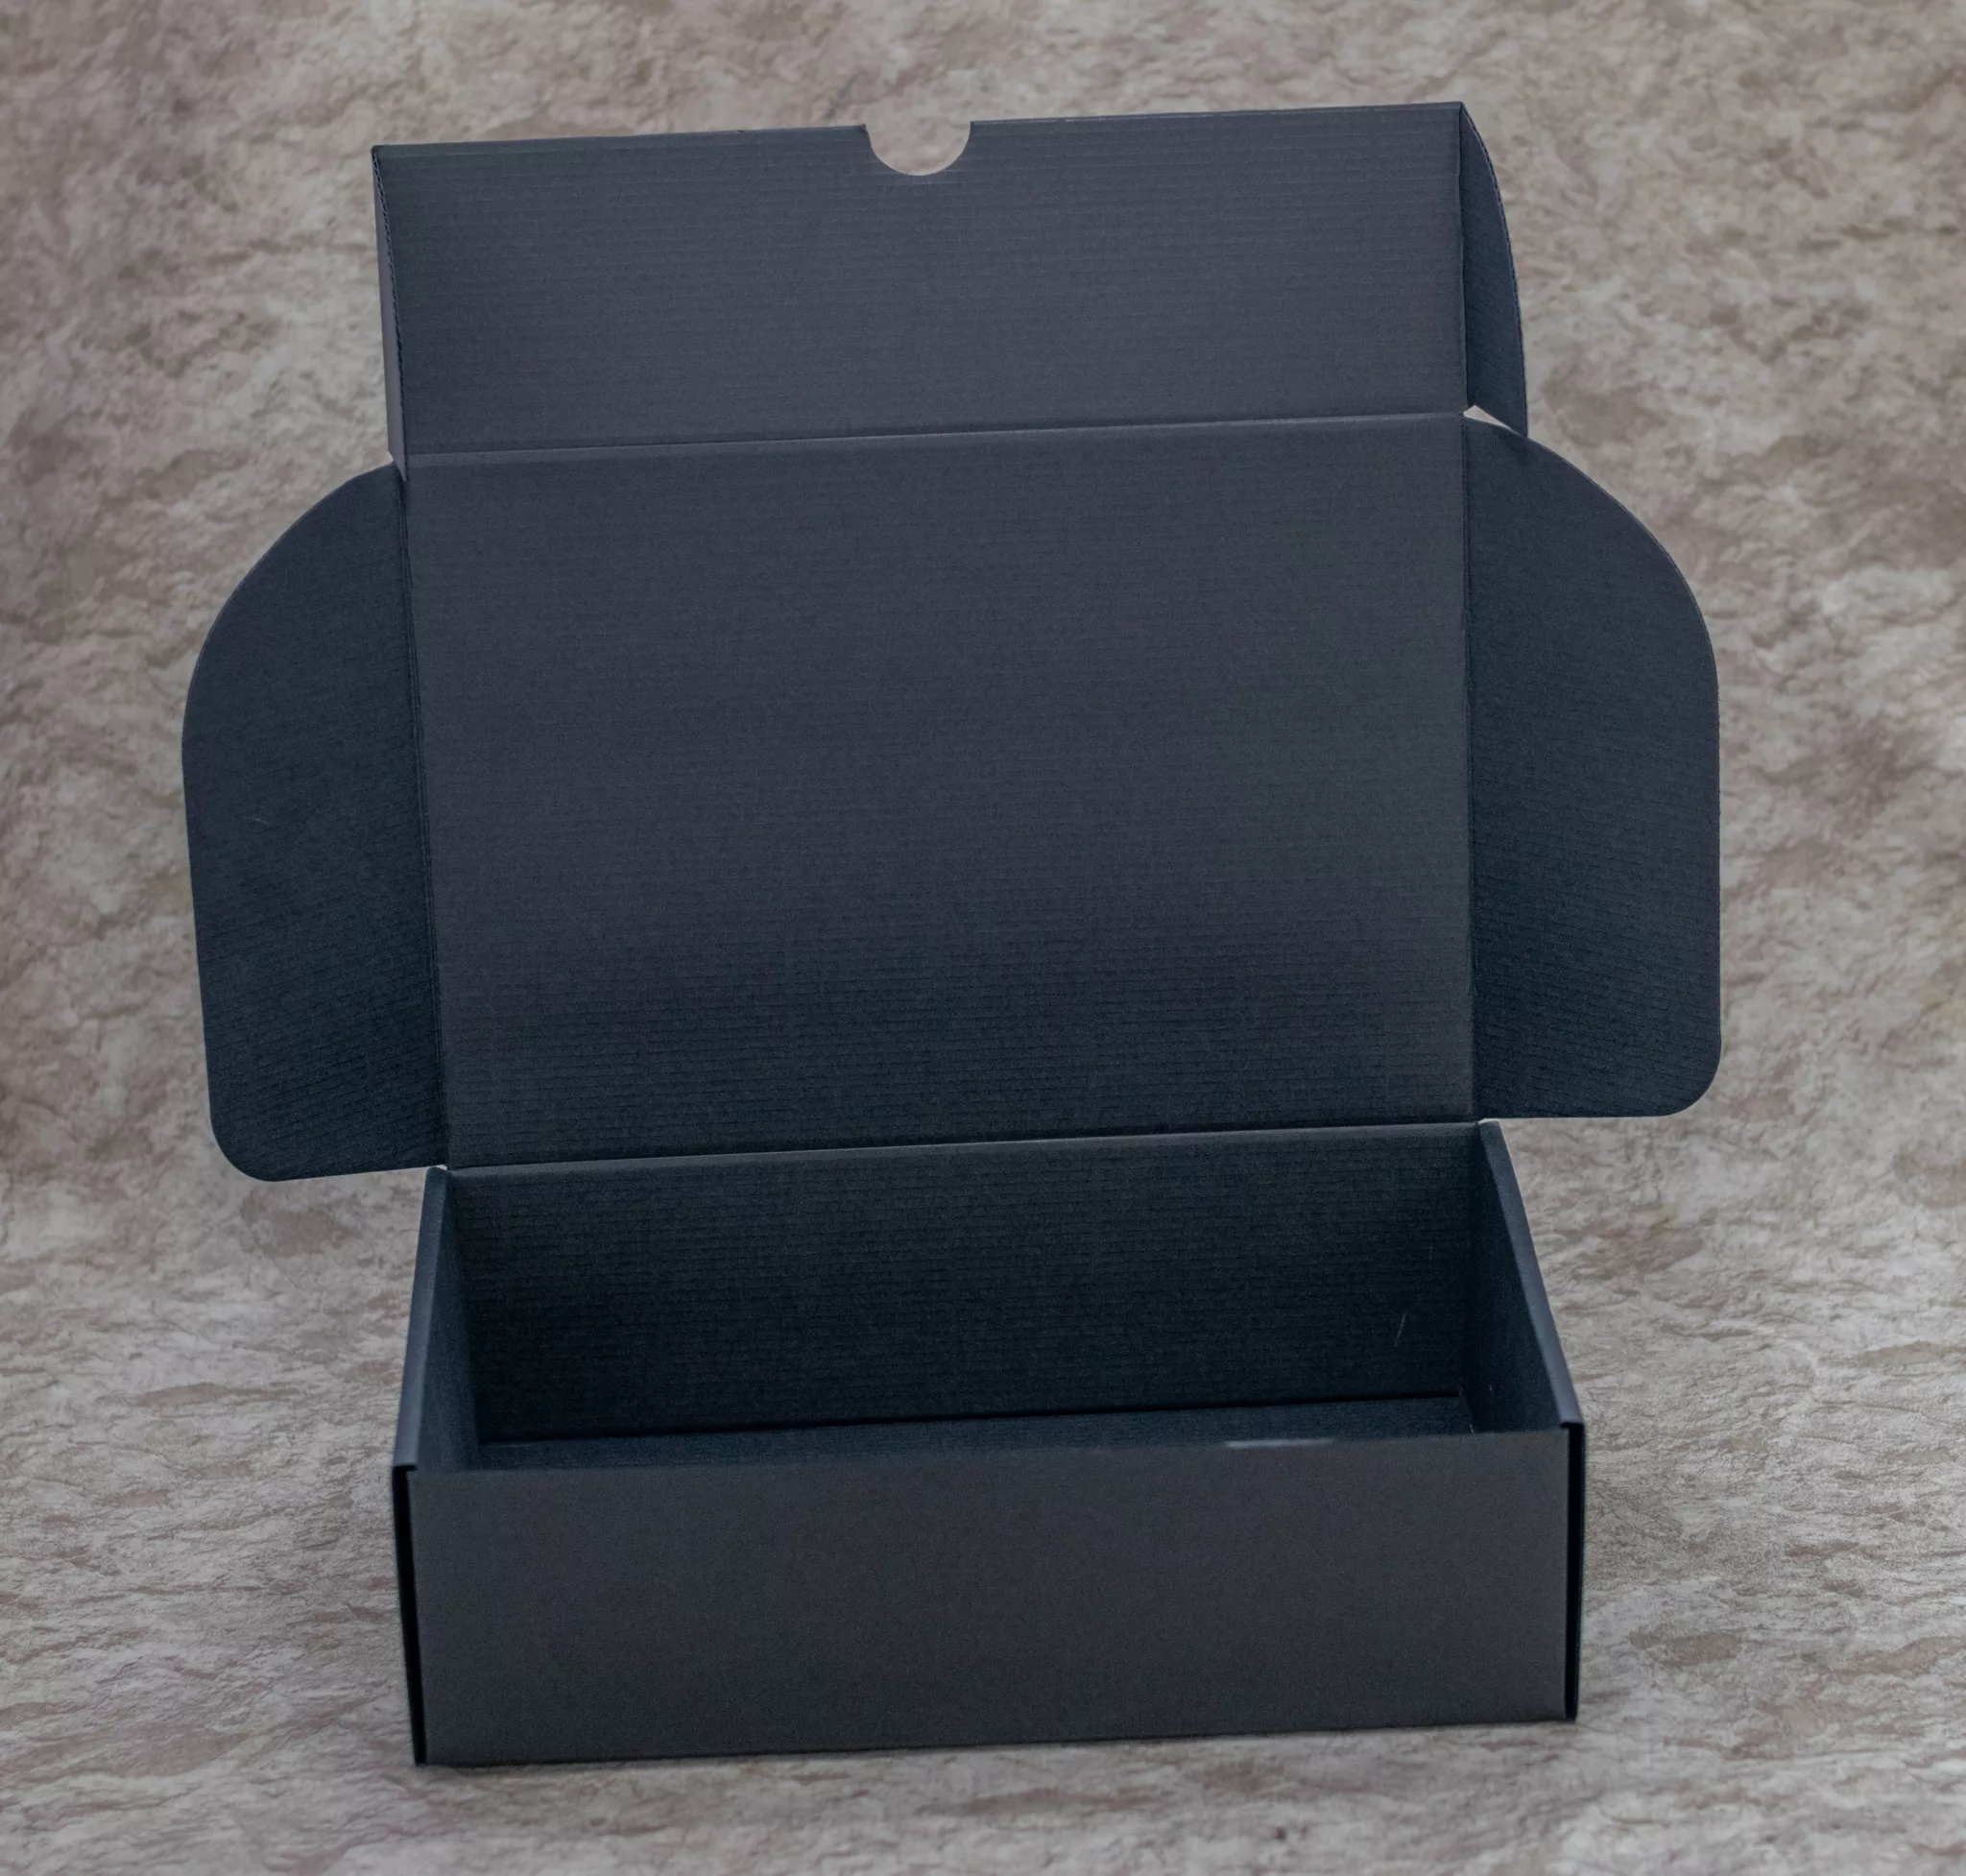 Black Packaging Gift Box